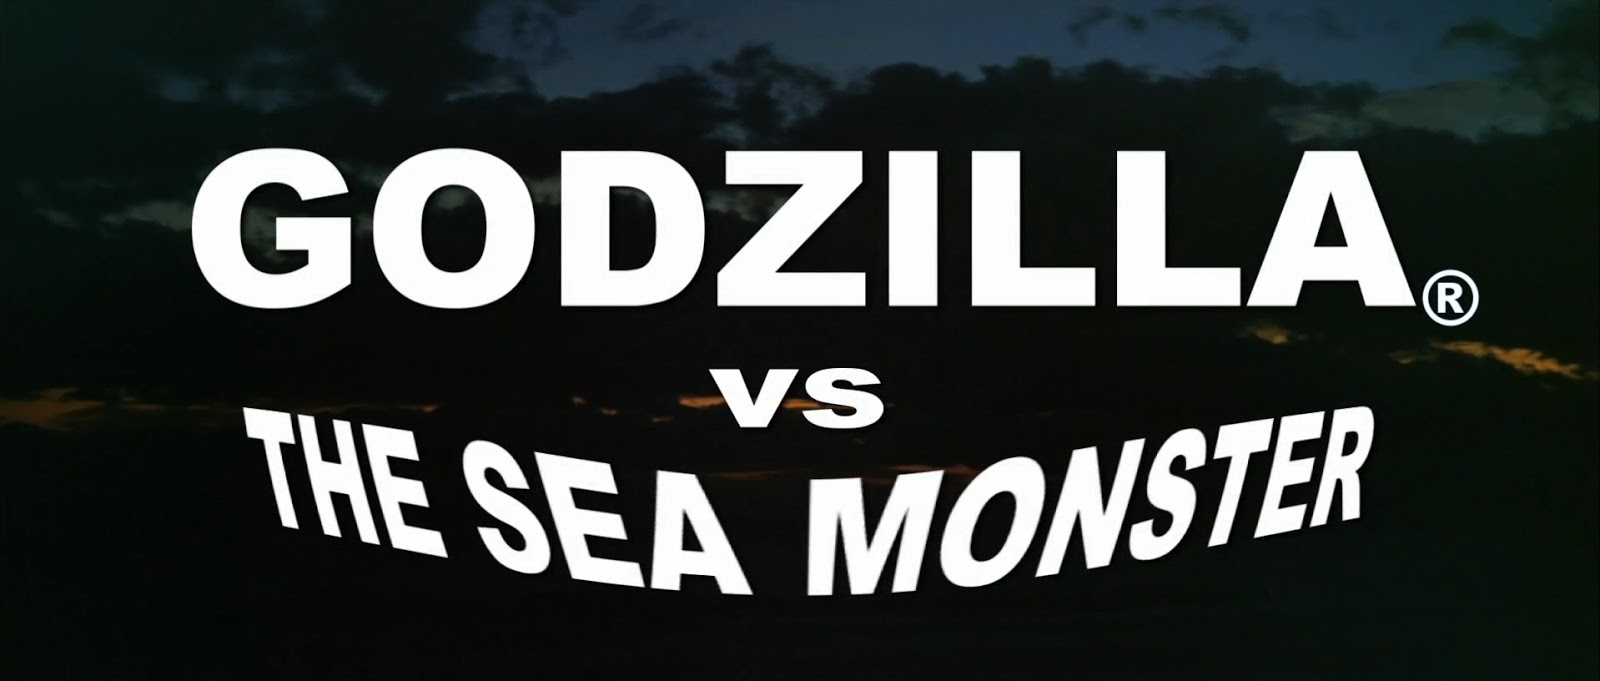 Godzilla vs the sea monster(1966)|1080P|Sub|